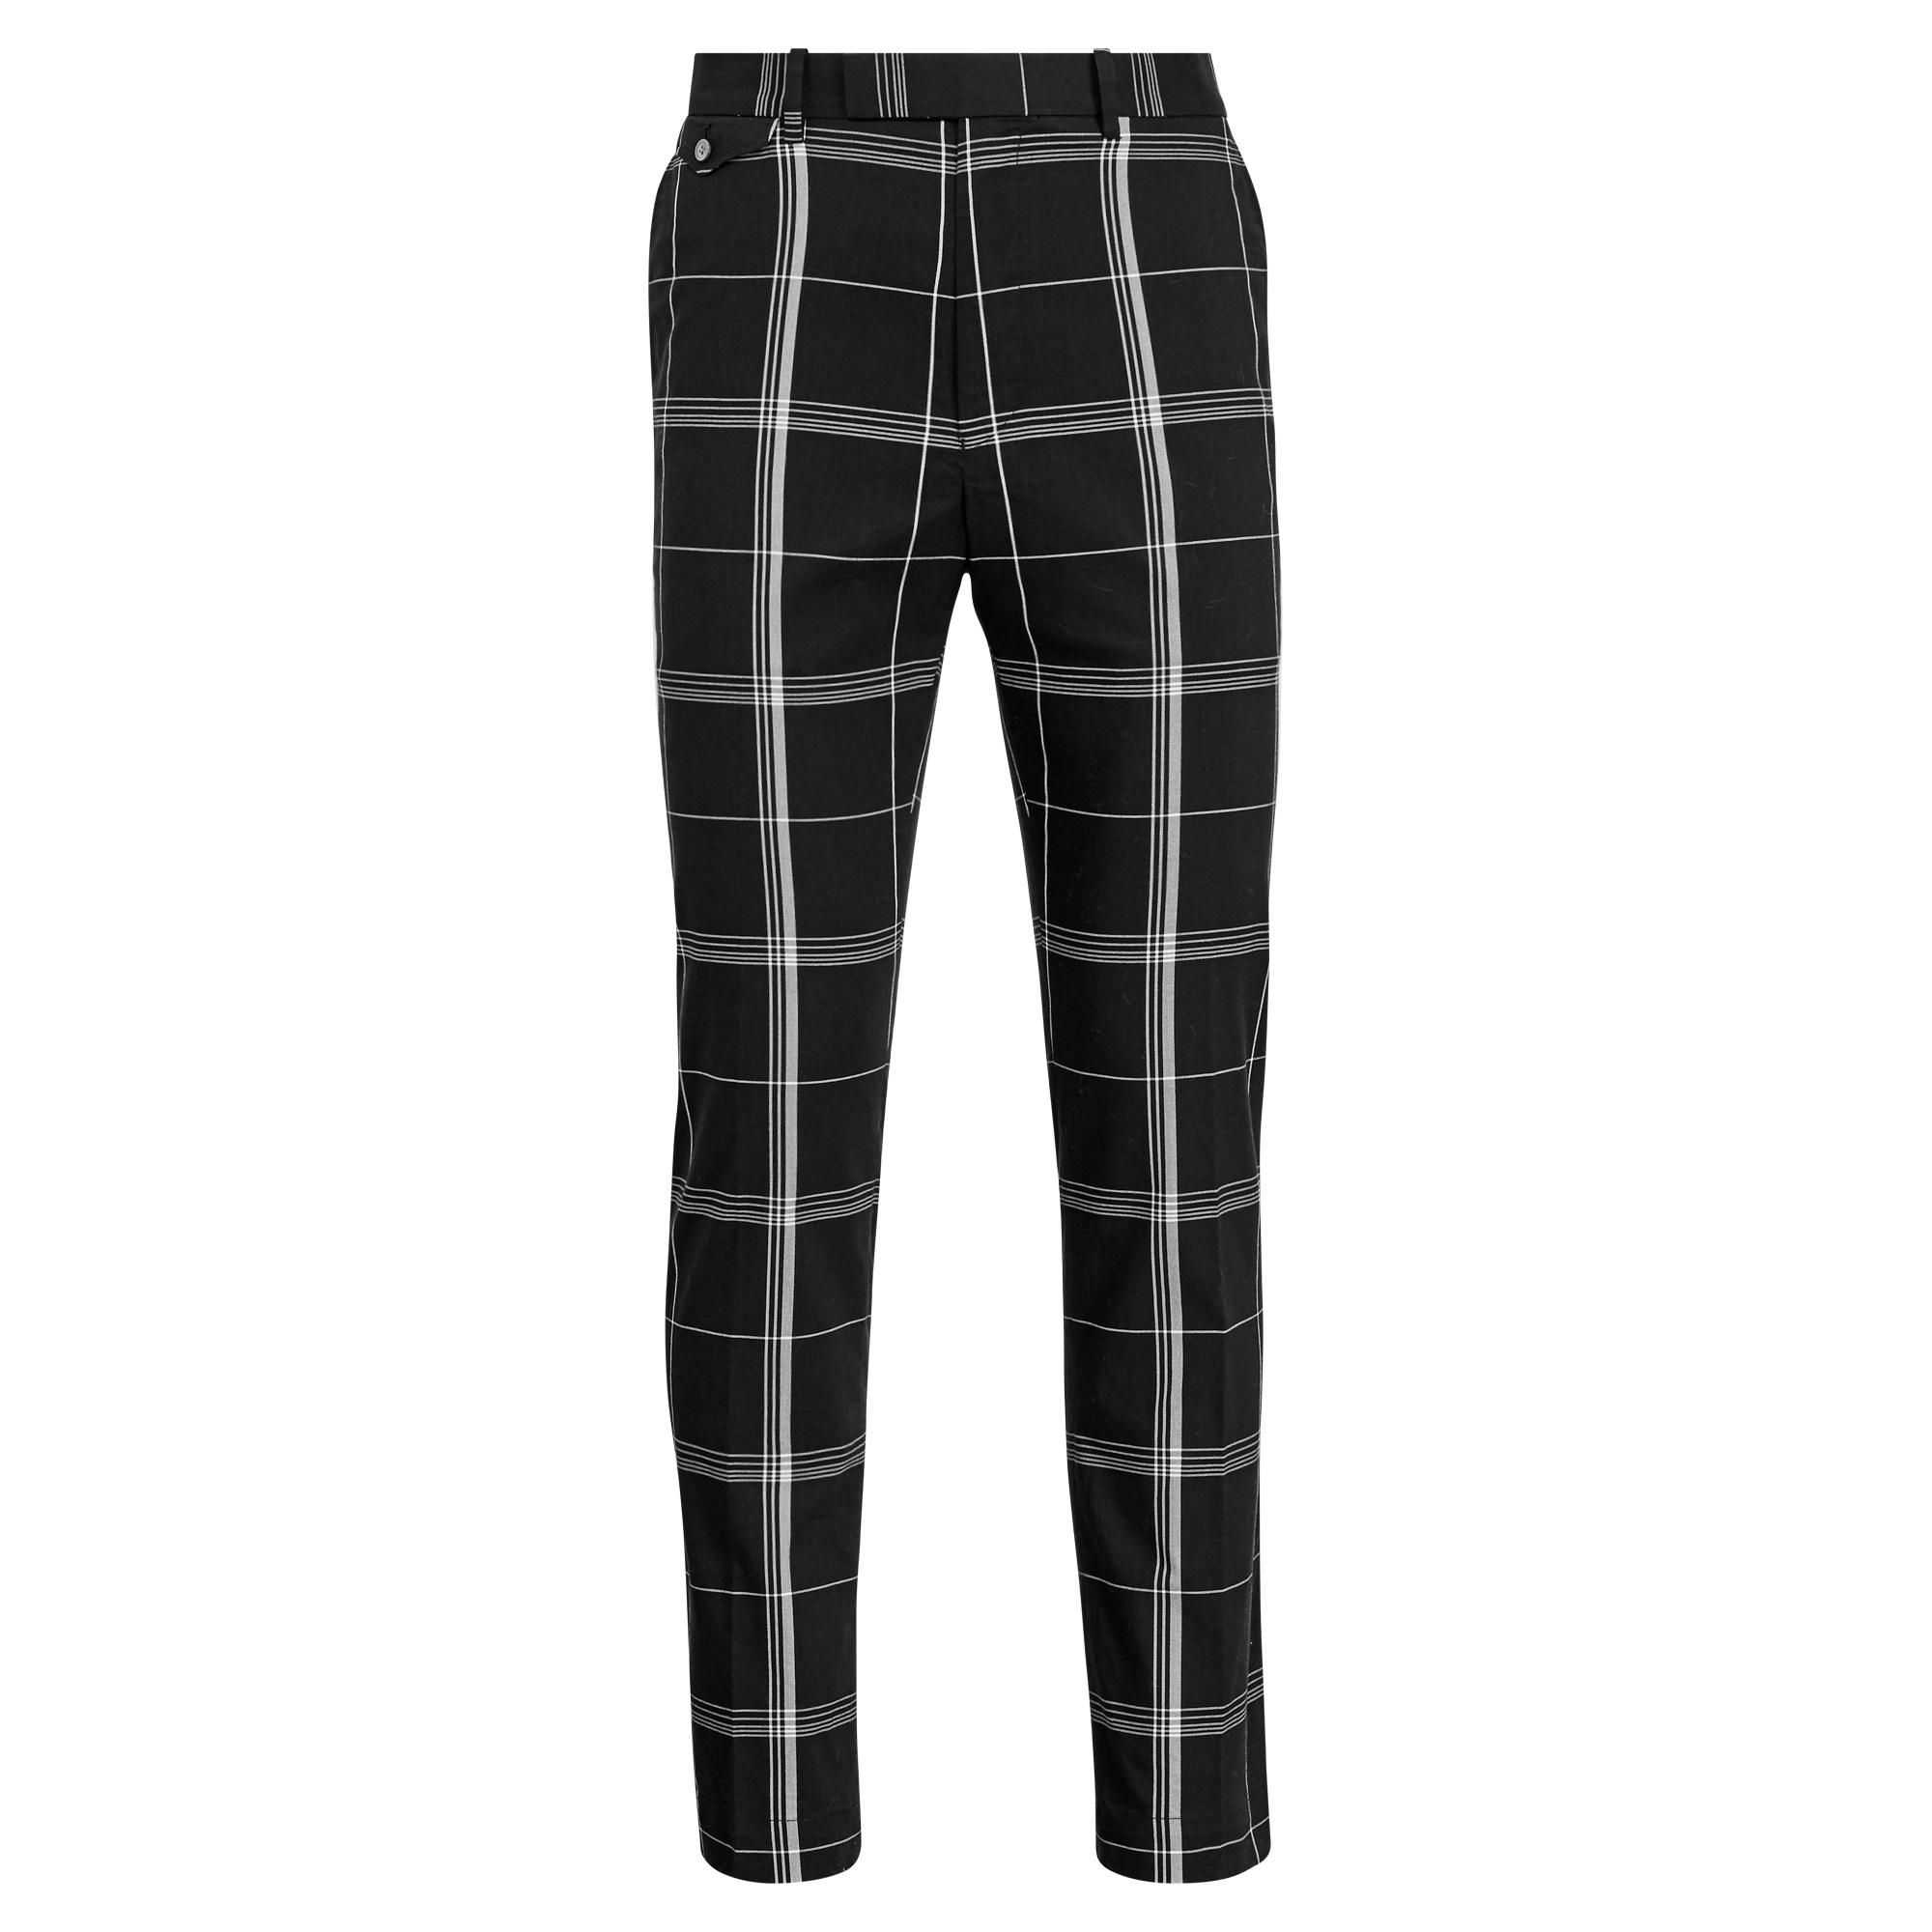 Ralph Lauren Cotton Tailored Fit Plaid Golf Pant in Black for Men - Lyst